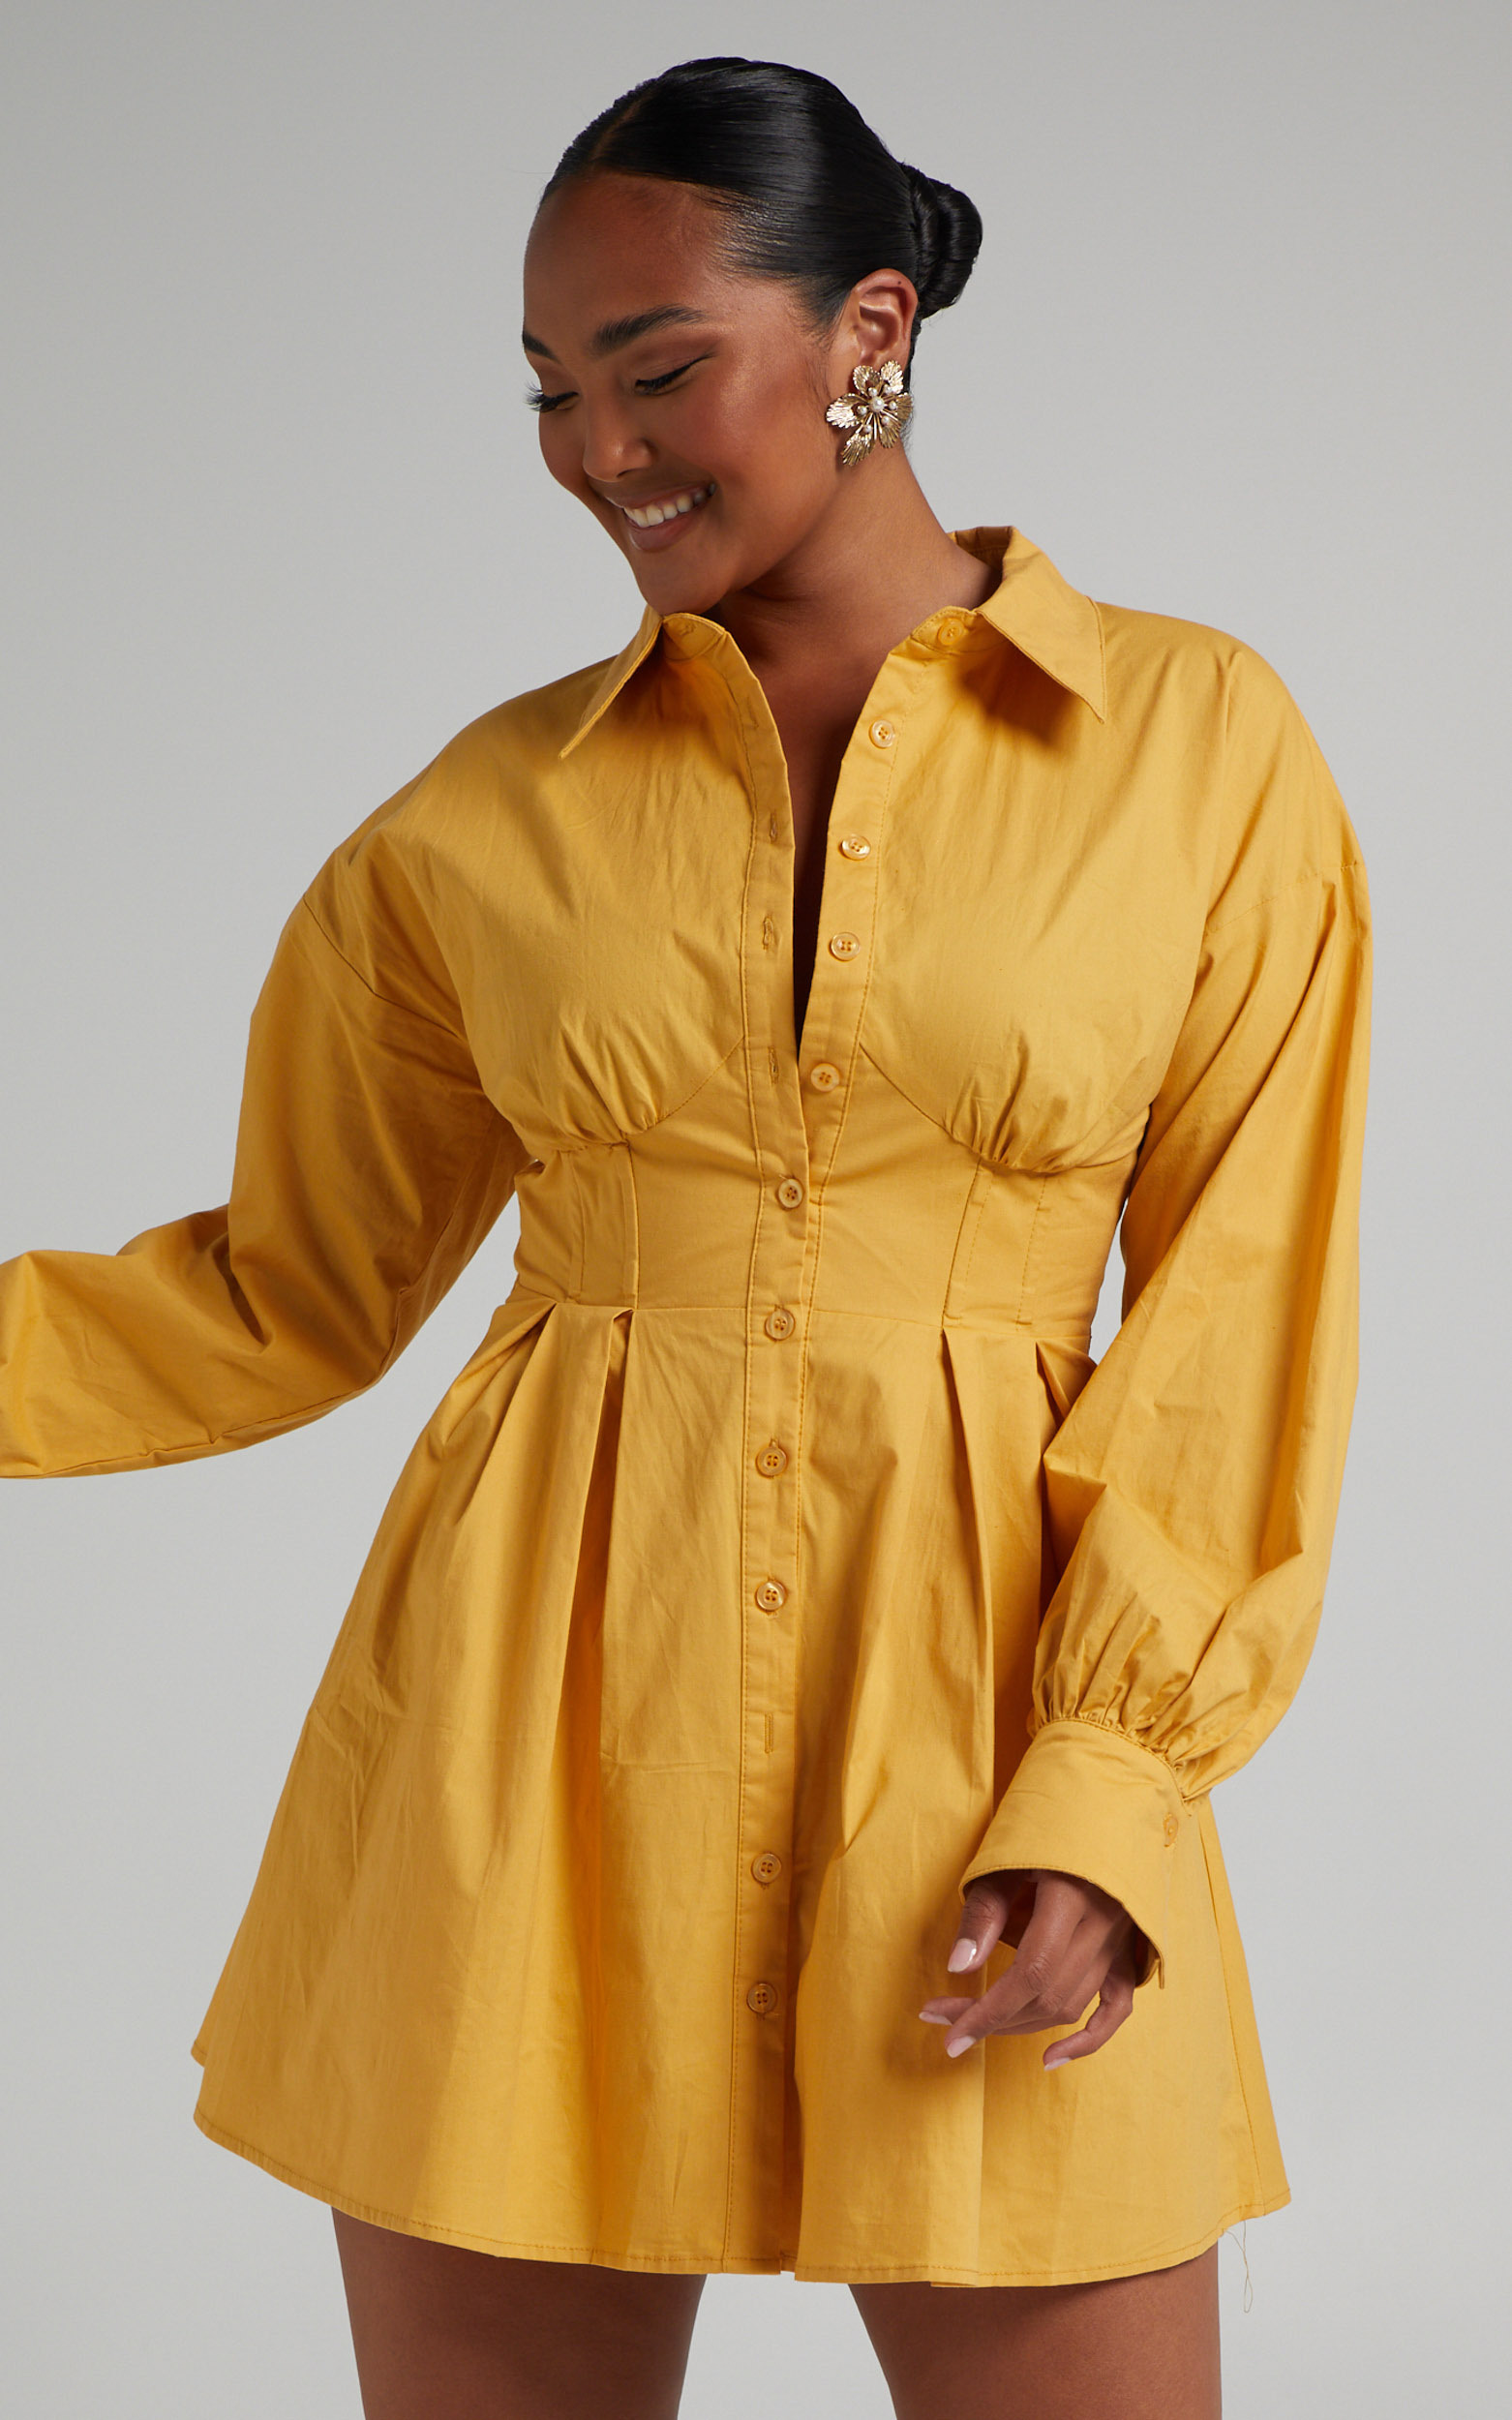 Claudette Mini Dress - Long Sleeve Corset Shirt Dress in Mustard - 06, YEL1, hi-res image number null